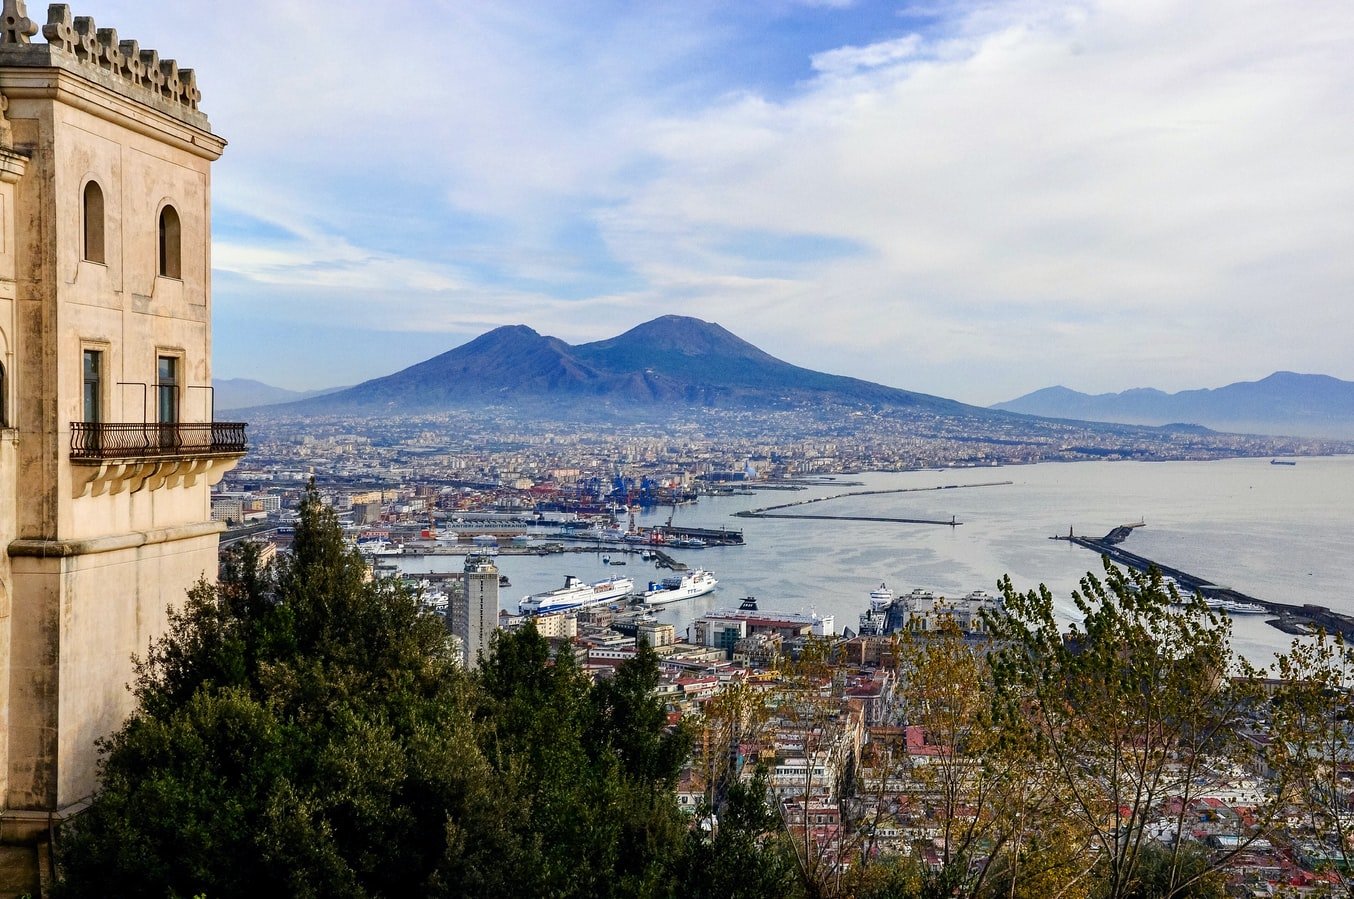 A view of Vesuvius | Source: Unsplash